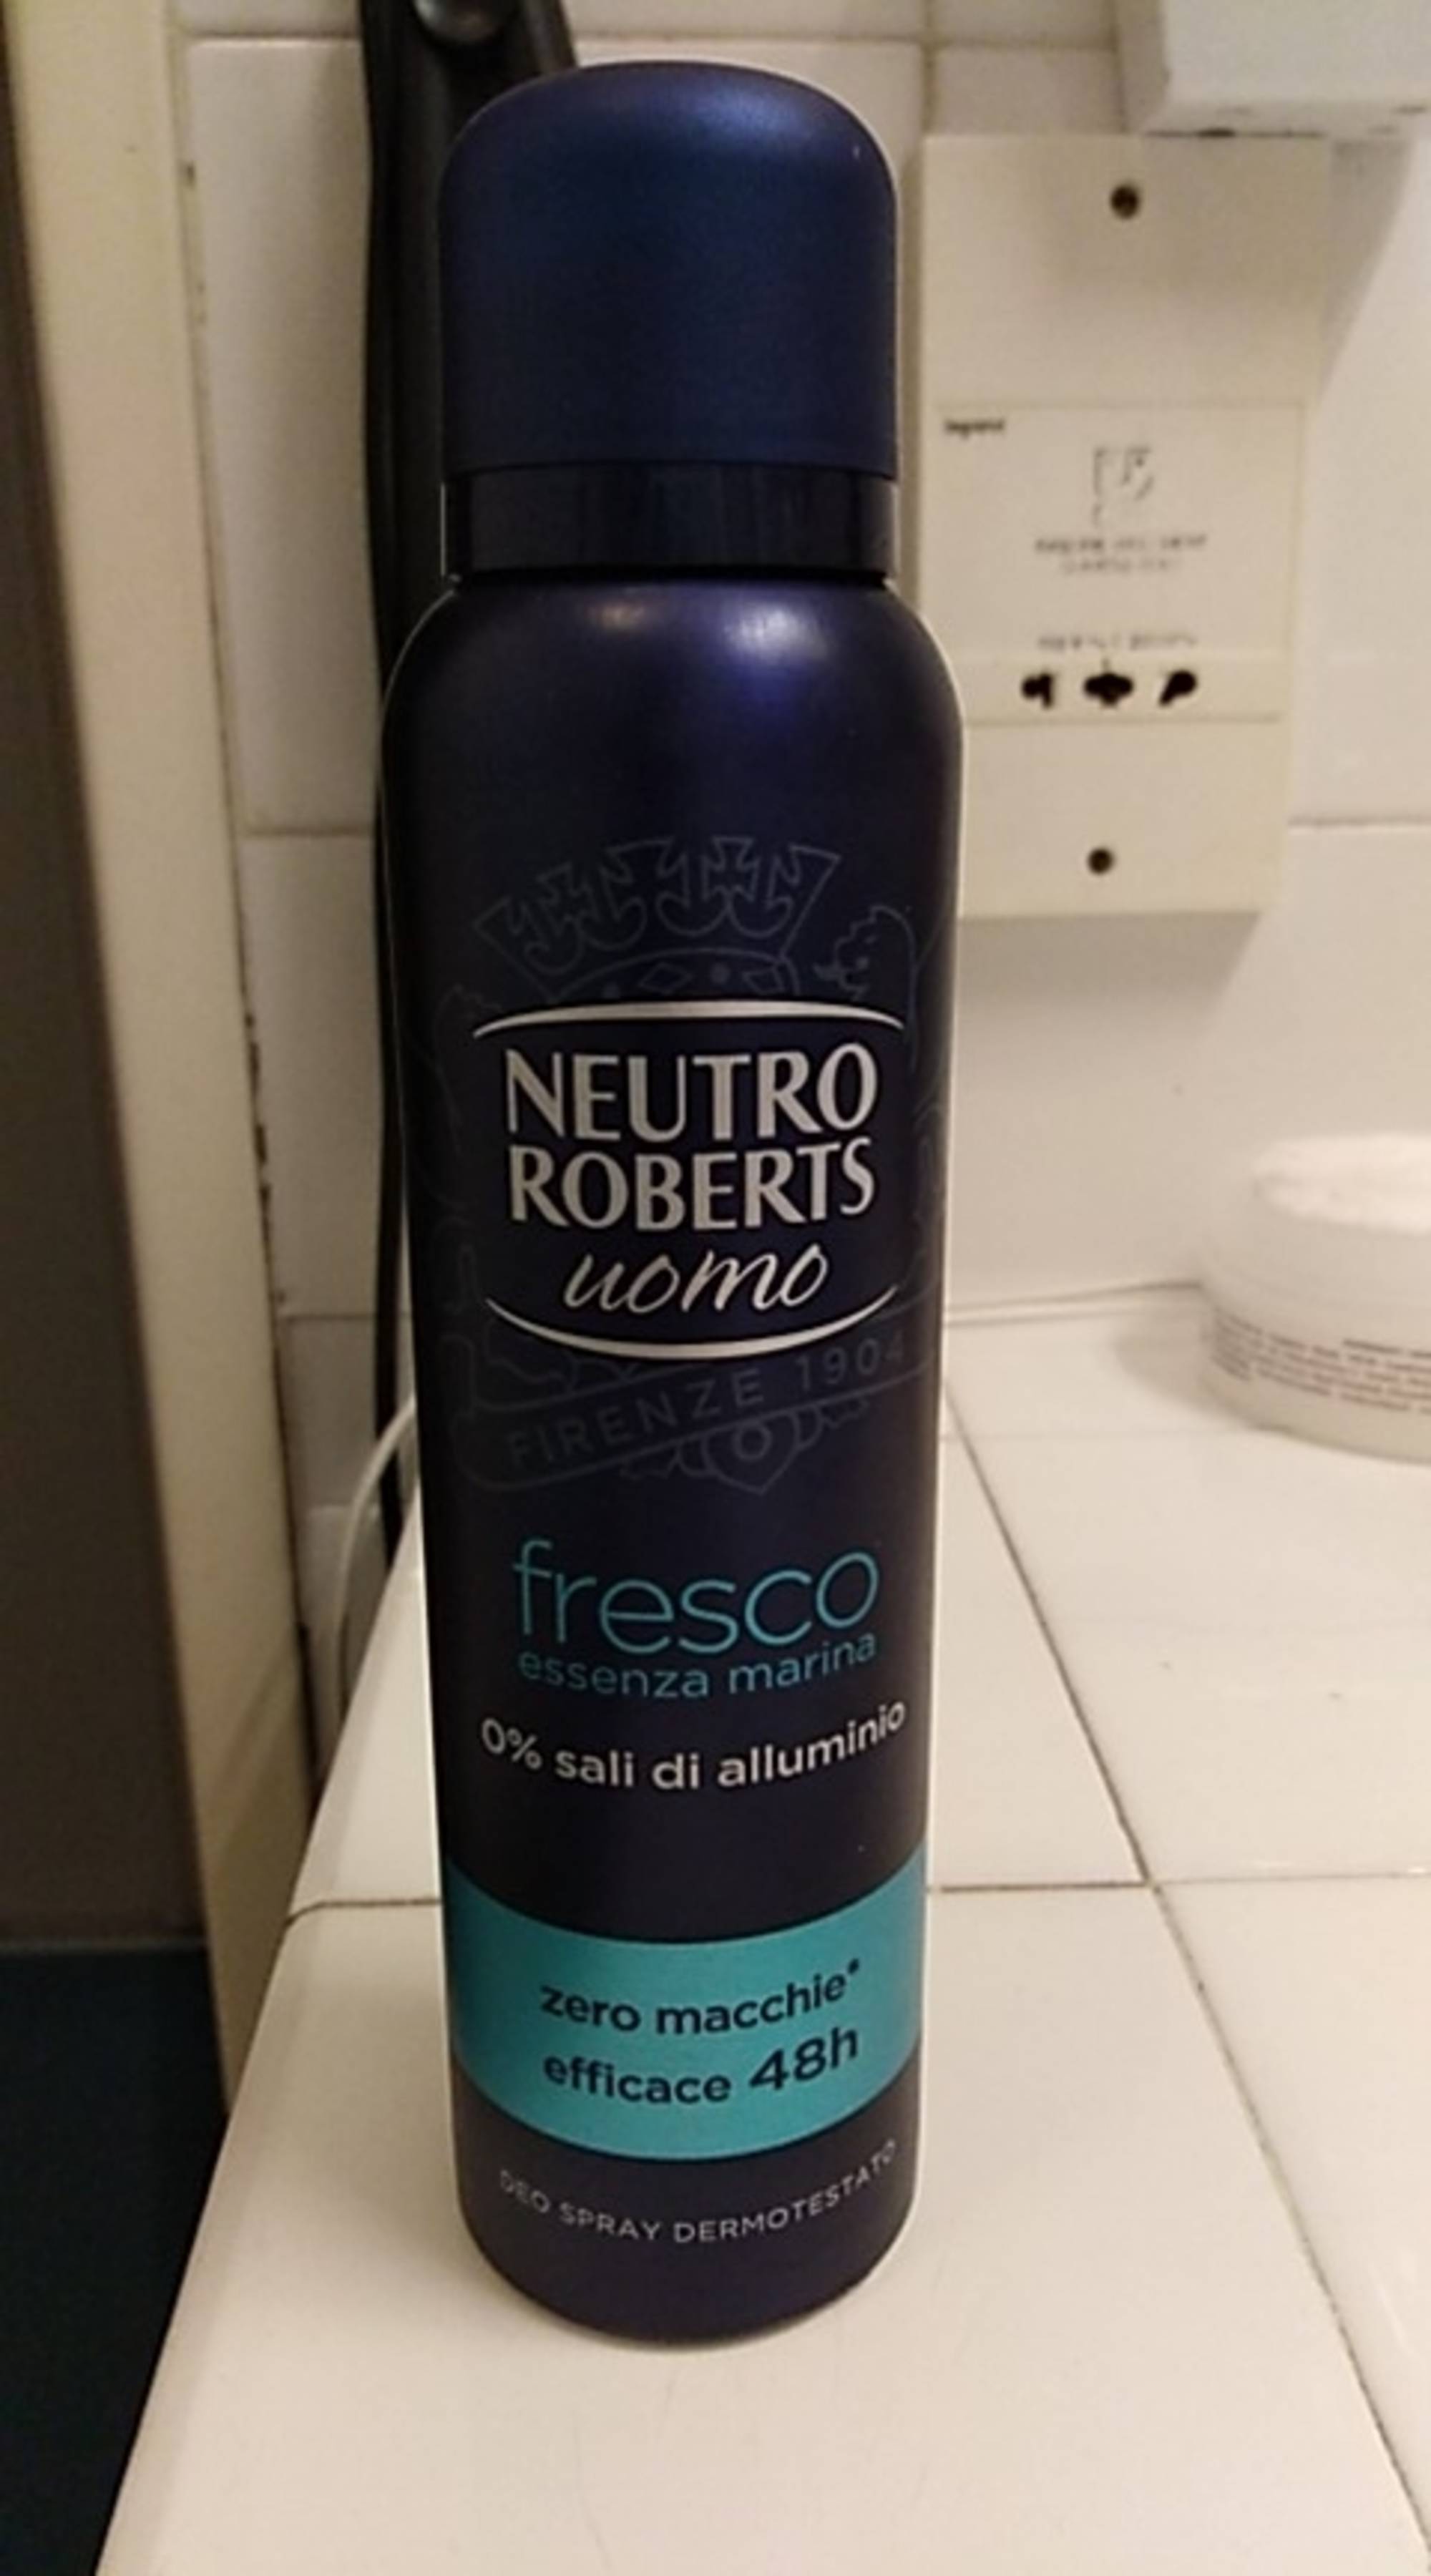 NEUTRO ROBERTS - Fresco - Deo spray efficace 48h